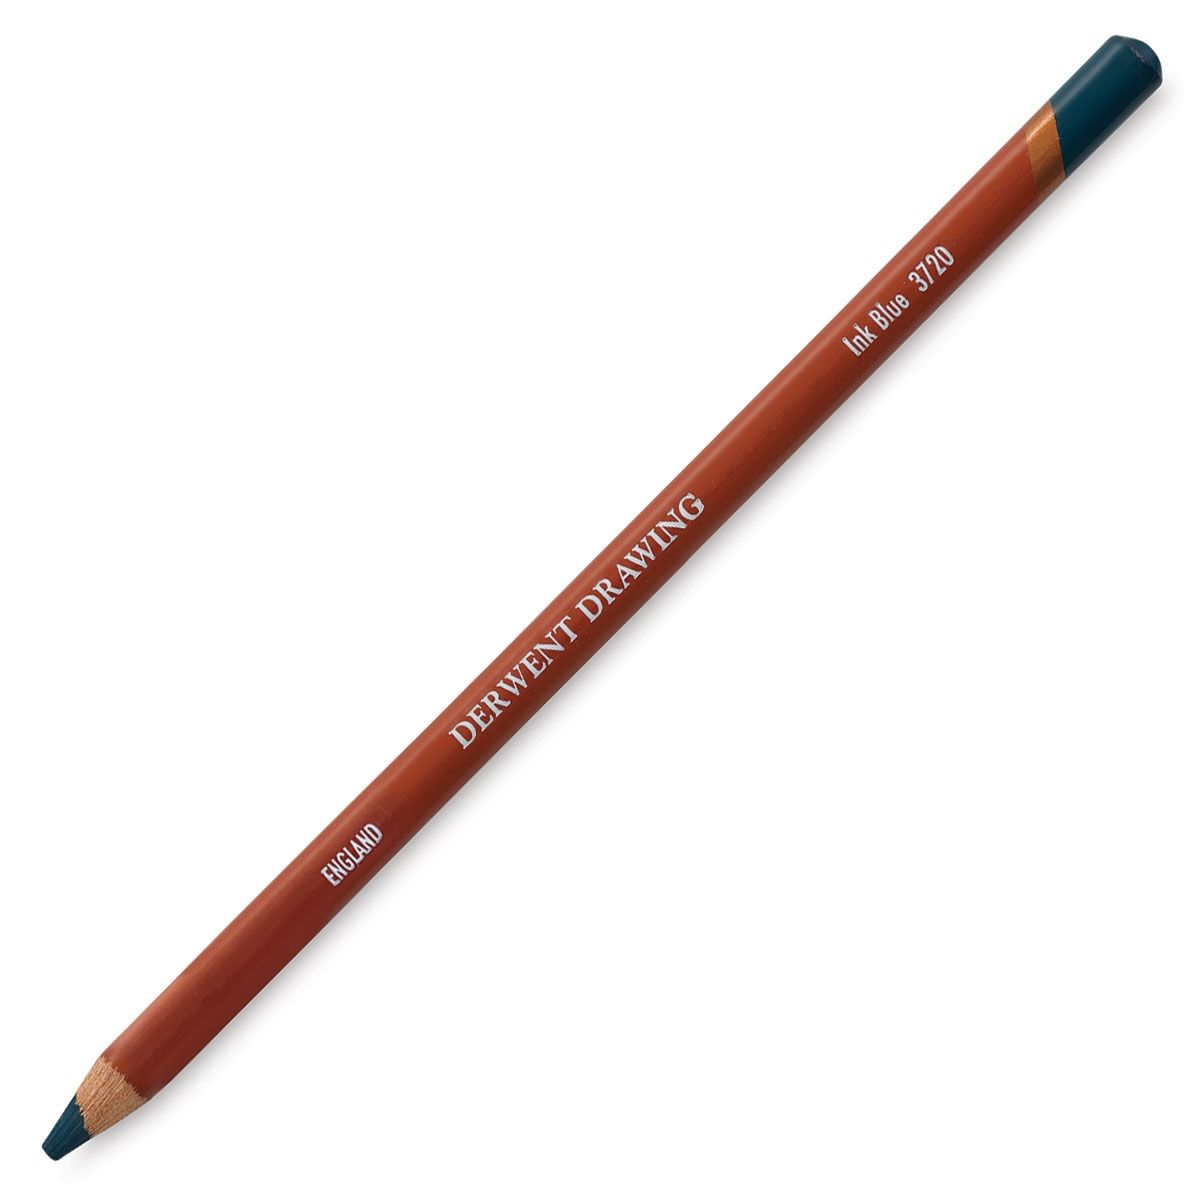 Derwent Drawing Pencil - Ink Blue